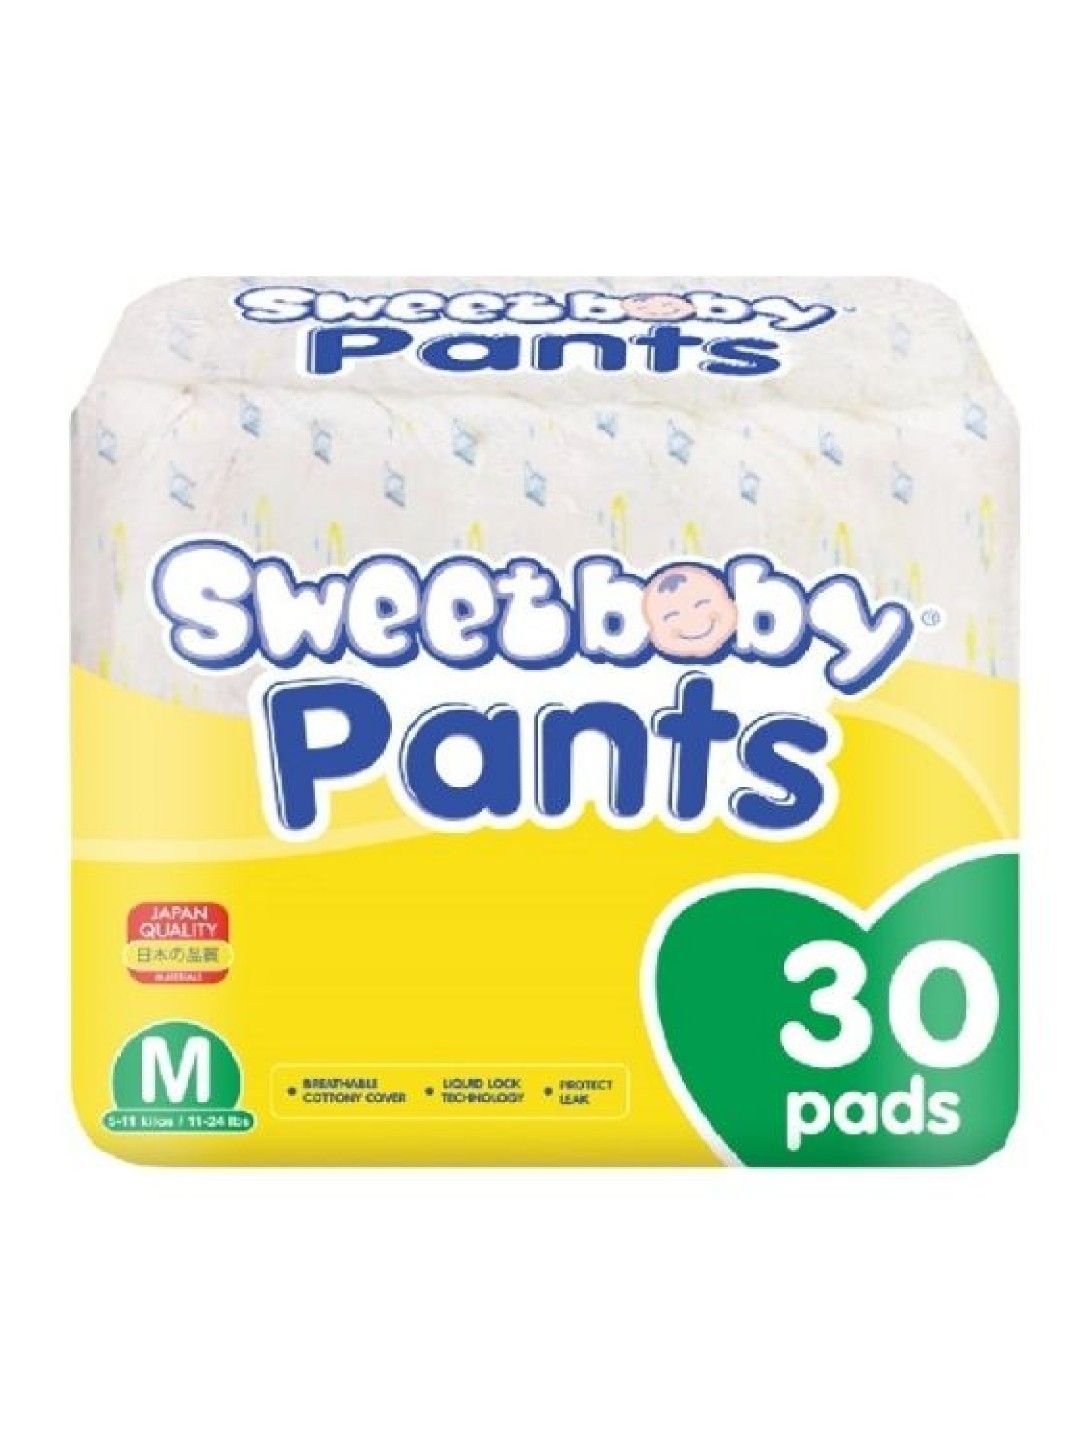 Sweetbaby Regular Pants (30 pcs)